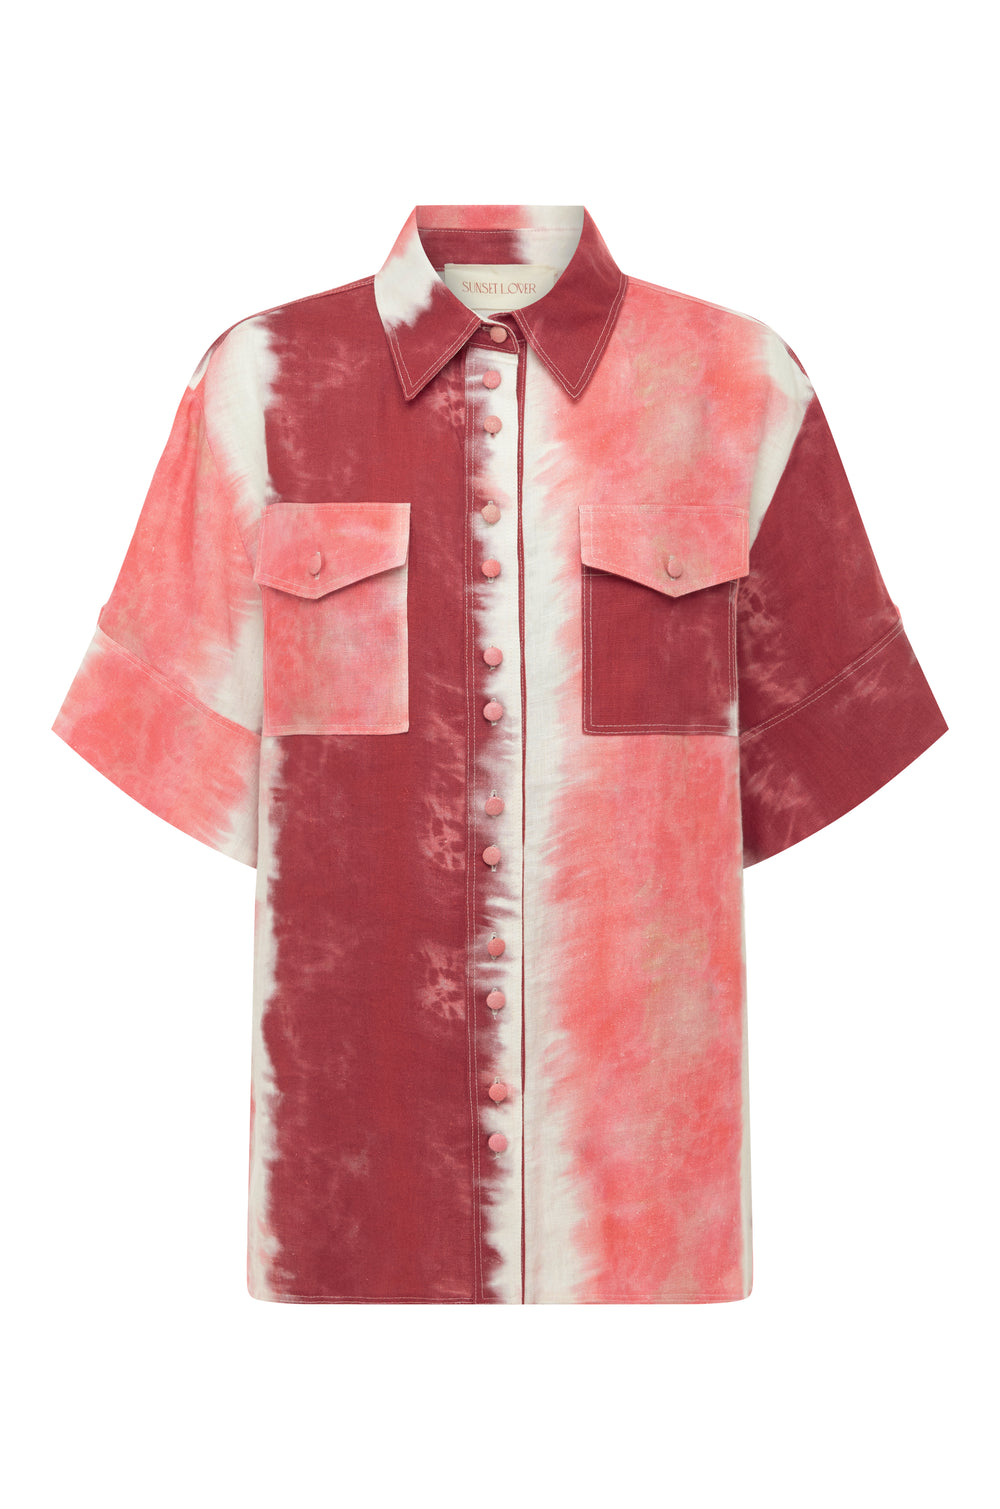 Rosewood Tie Dye Utility Shirt - Rosewood tie dye | Sunset Lover